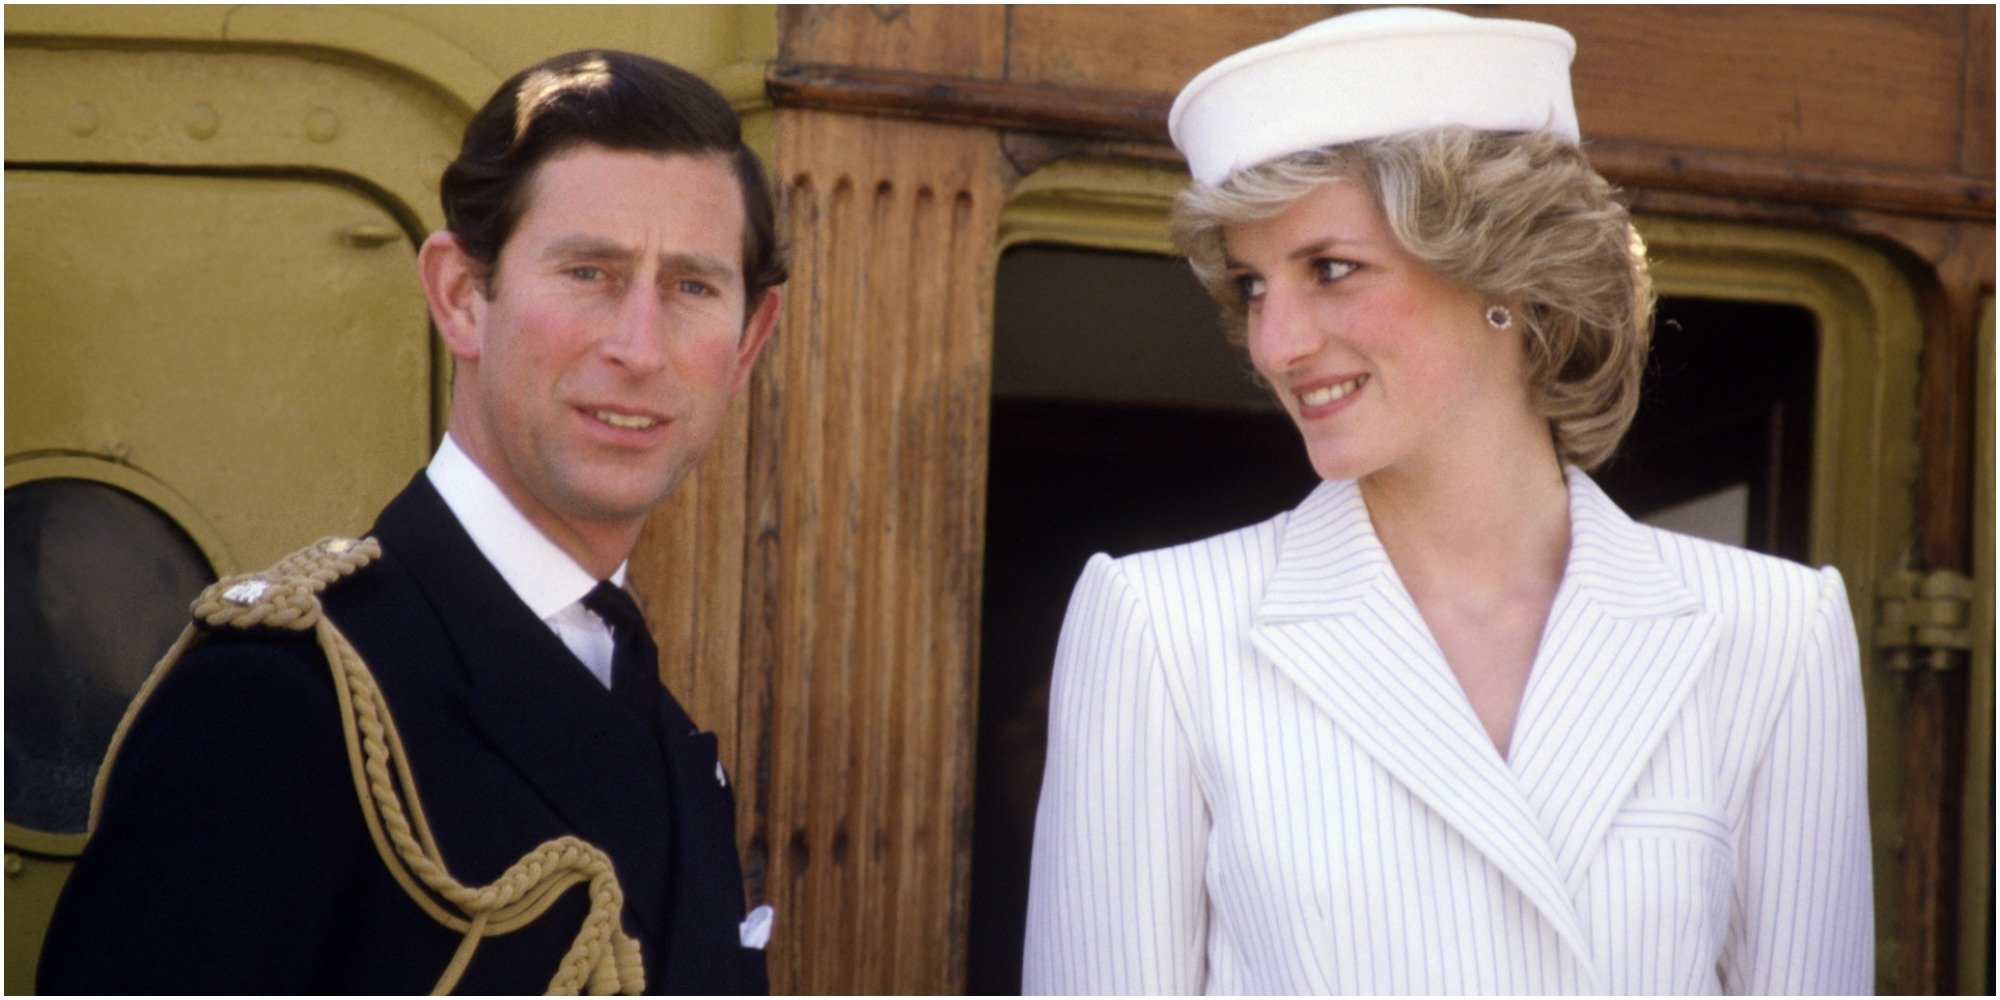 Prince Charles and Princess Diana pose for a photograph.